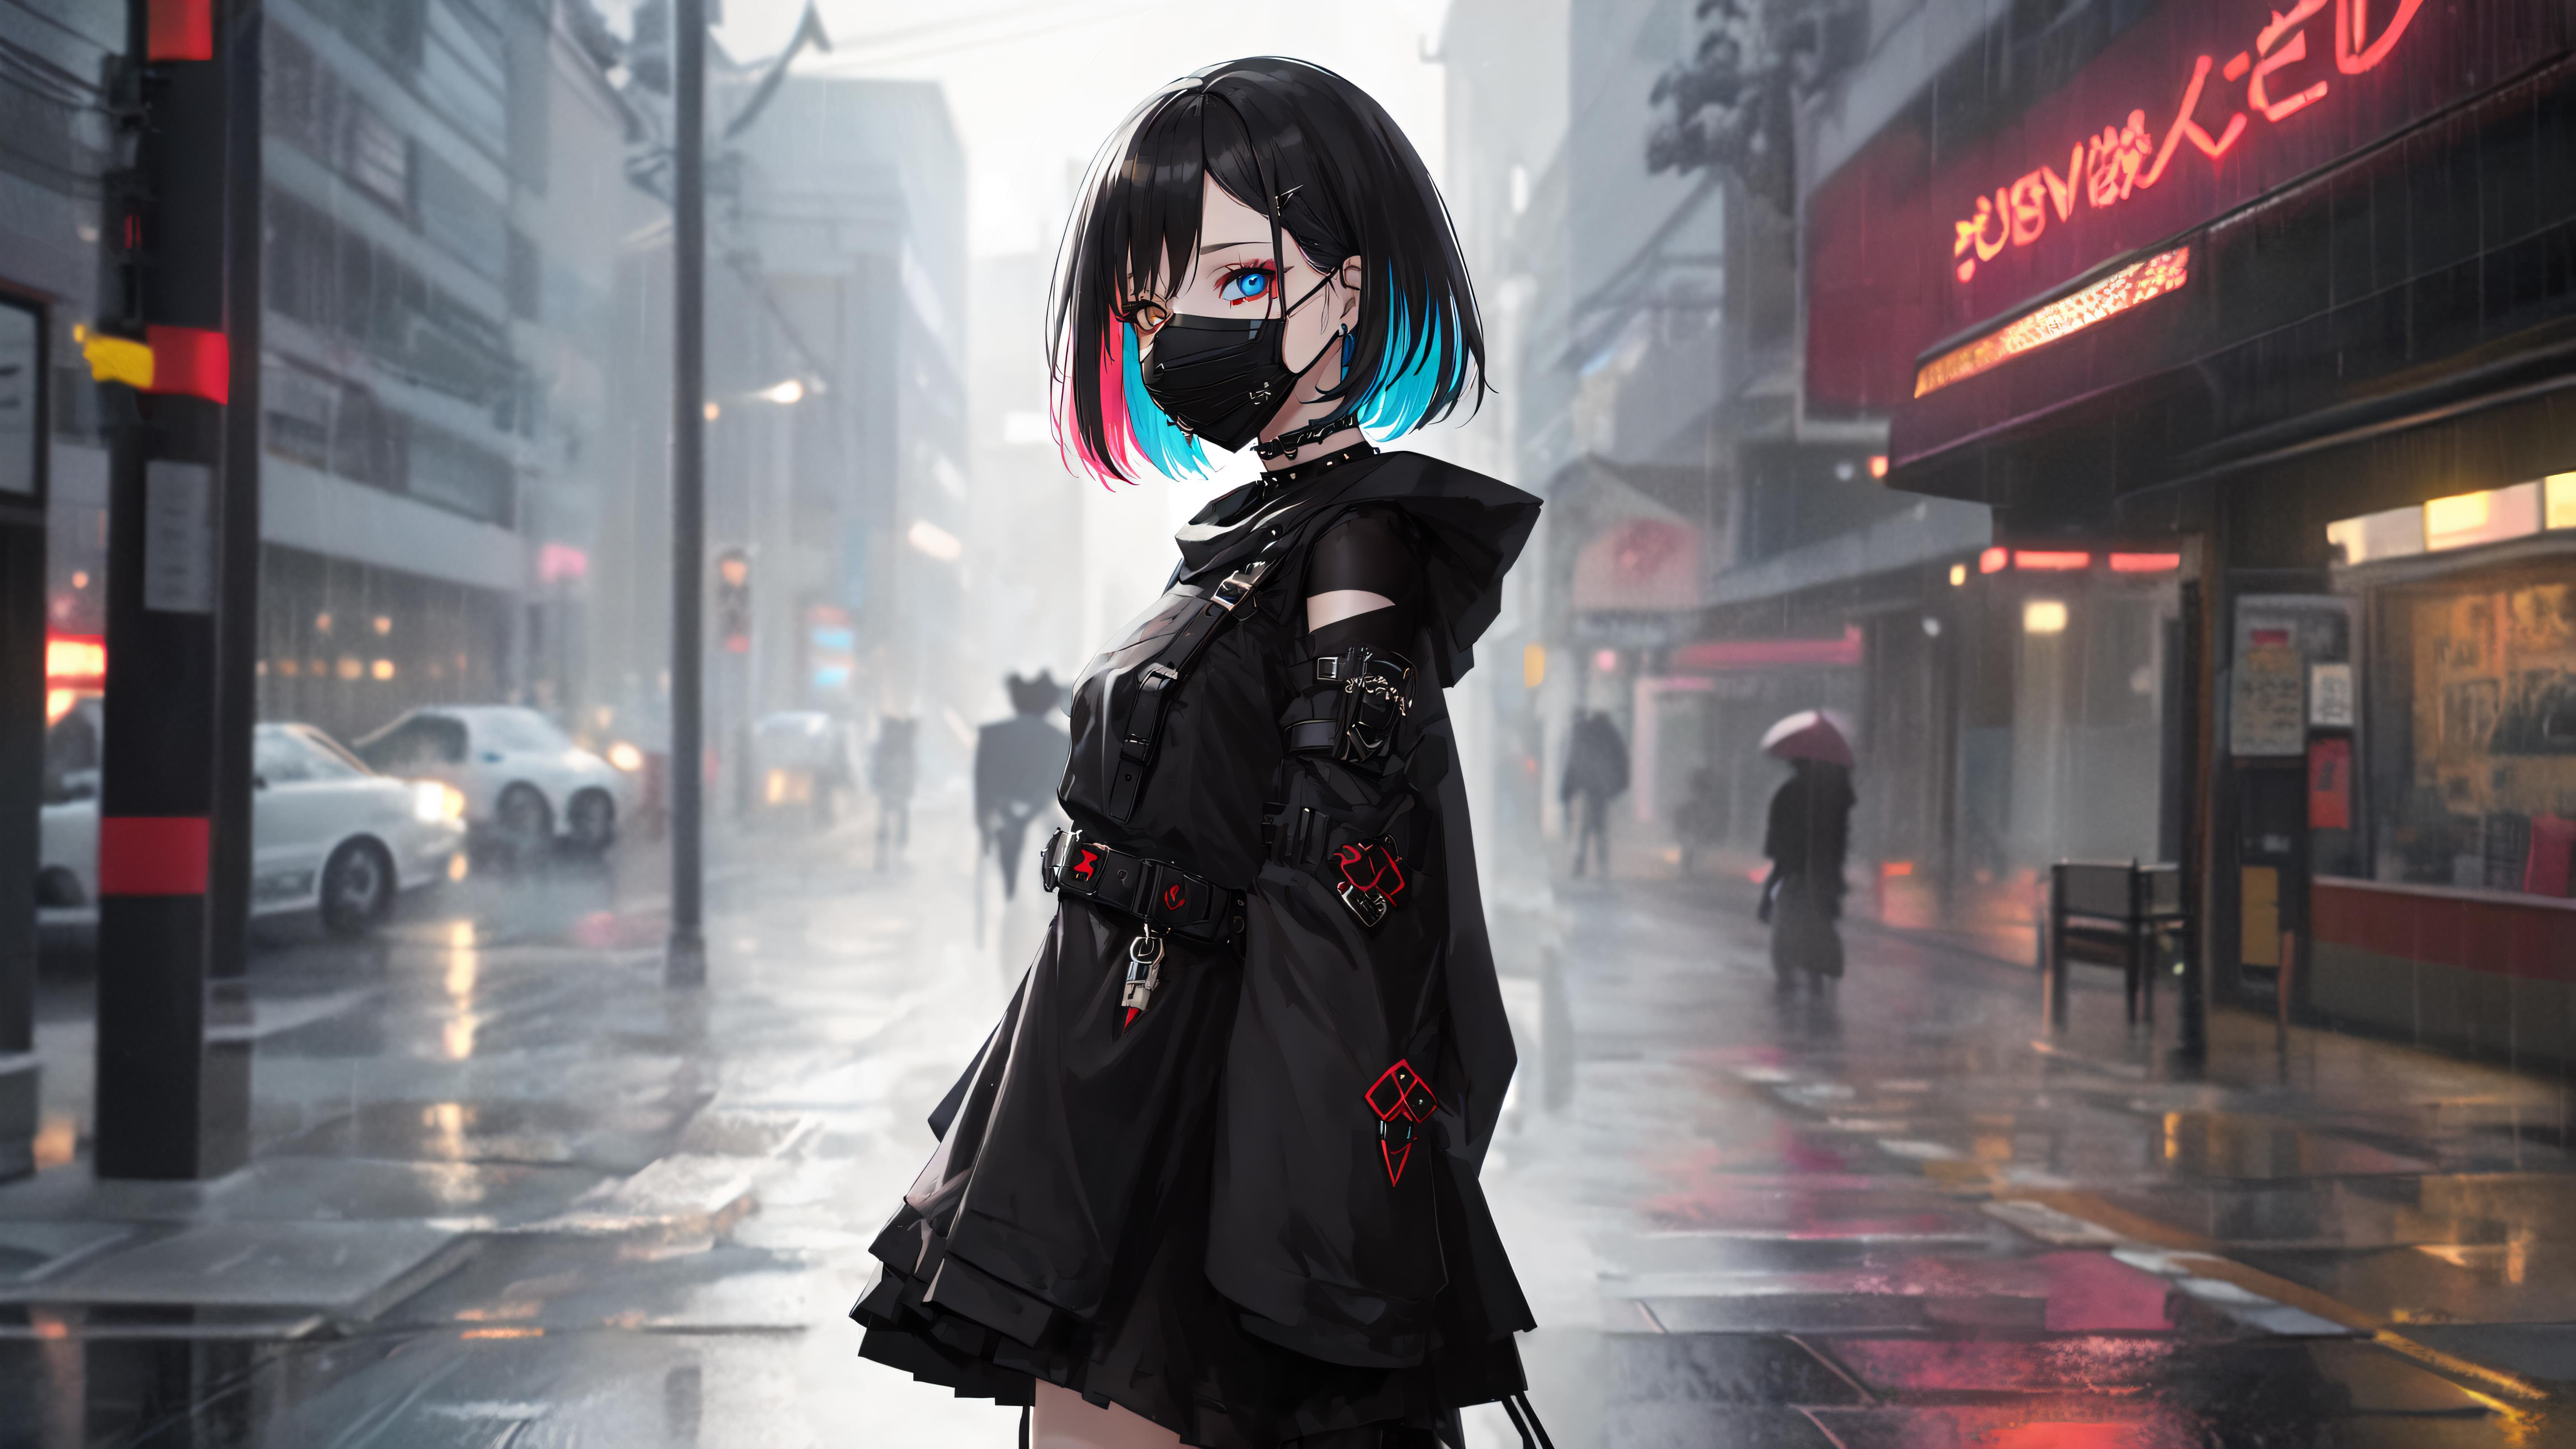 Gothic Punk Girl image by Gladas